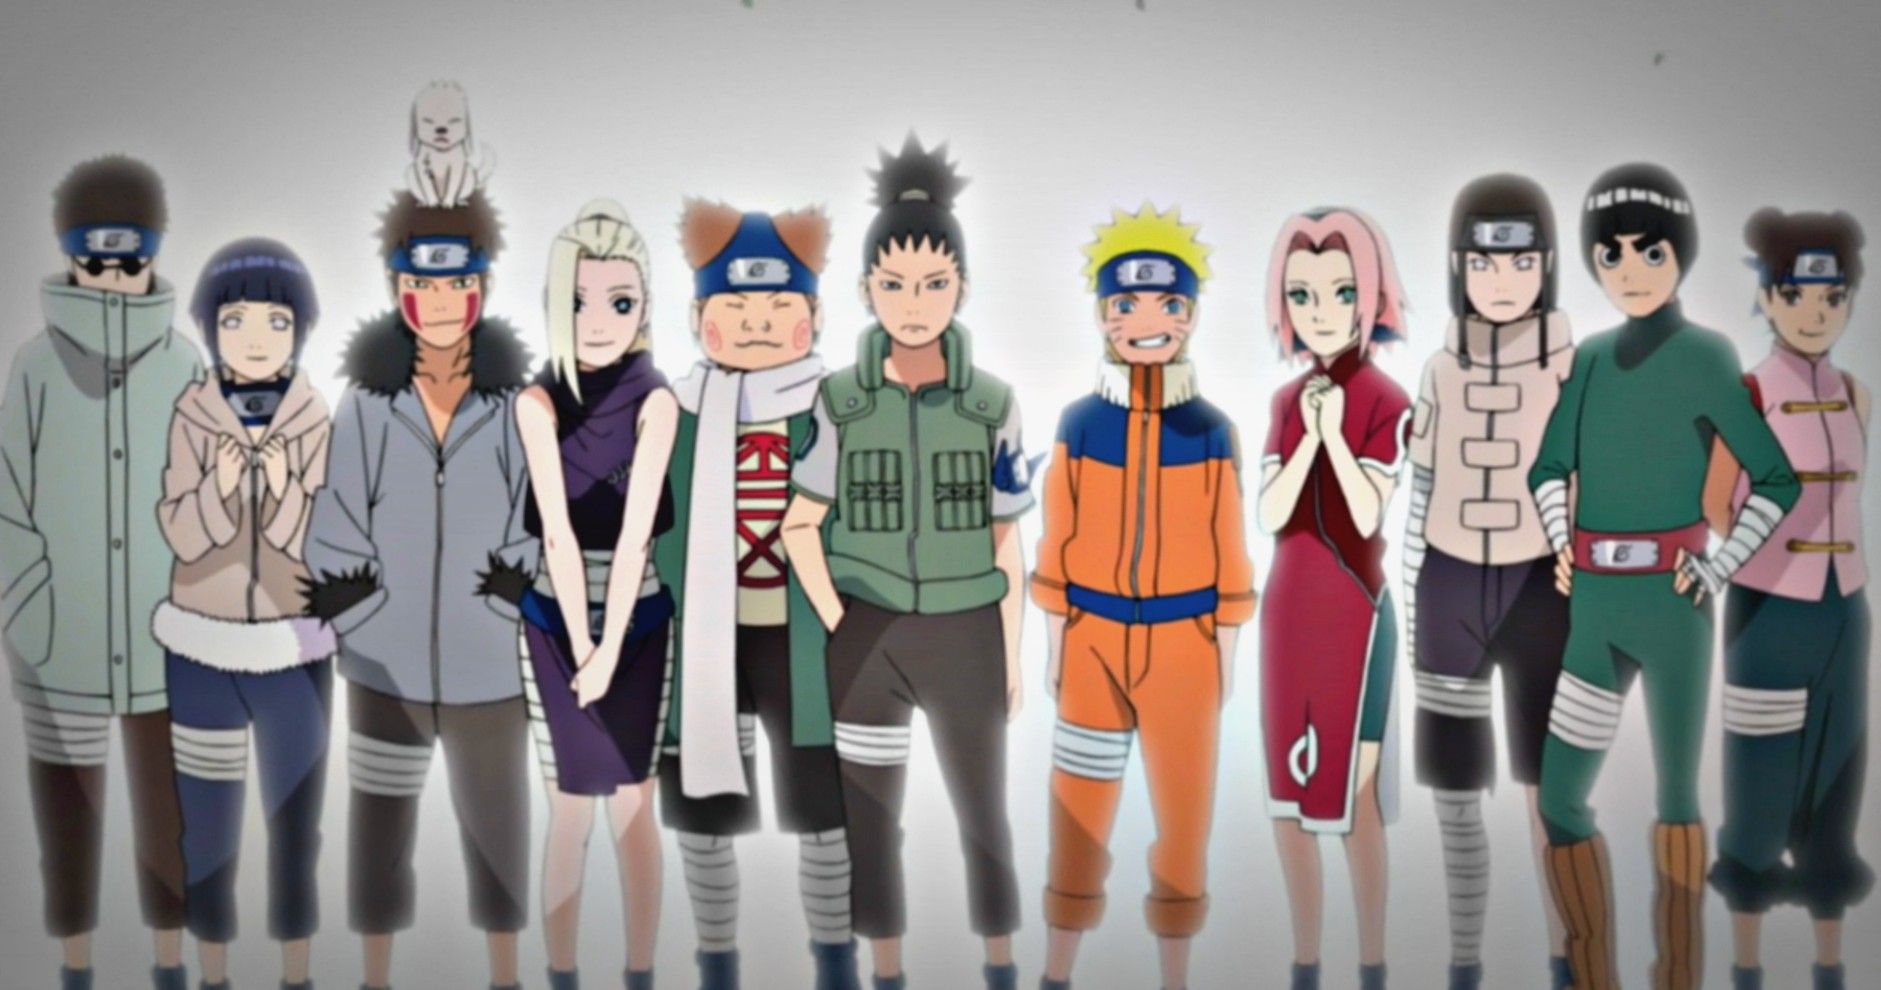 All Naruto characters